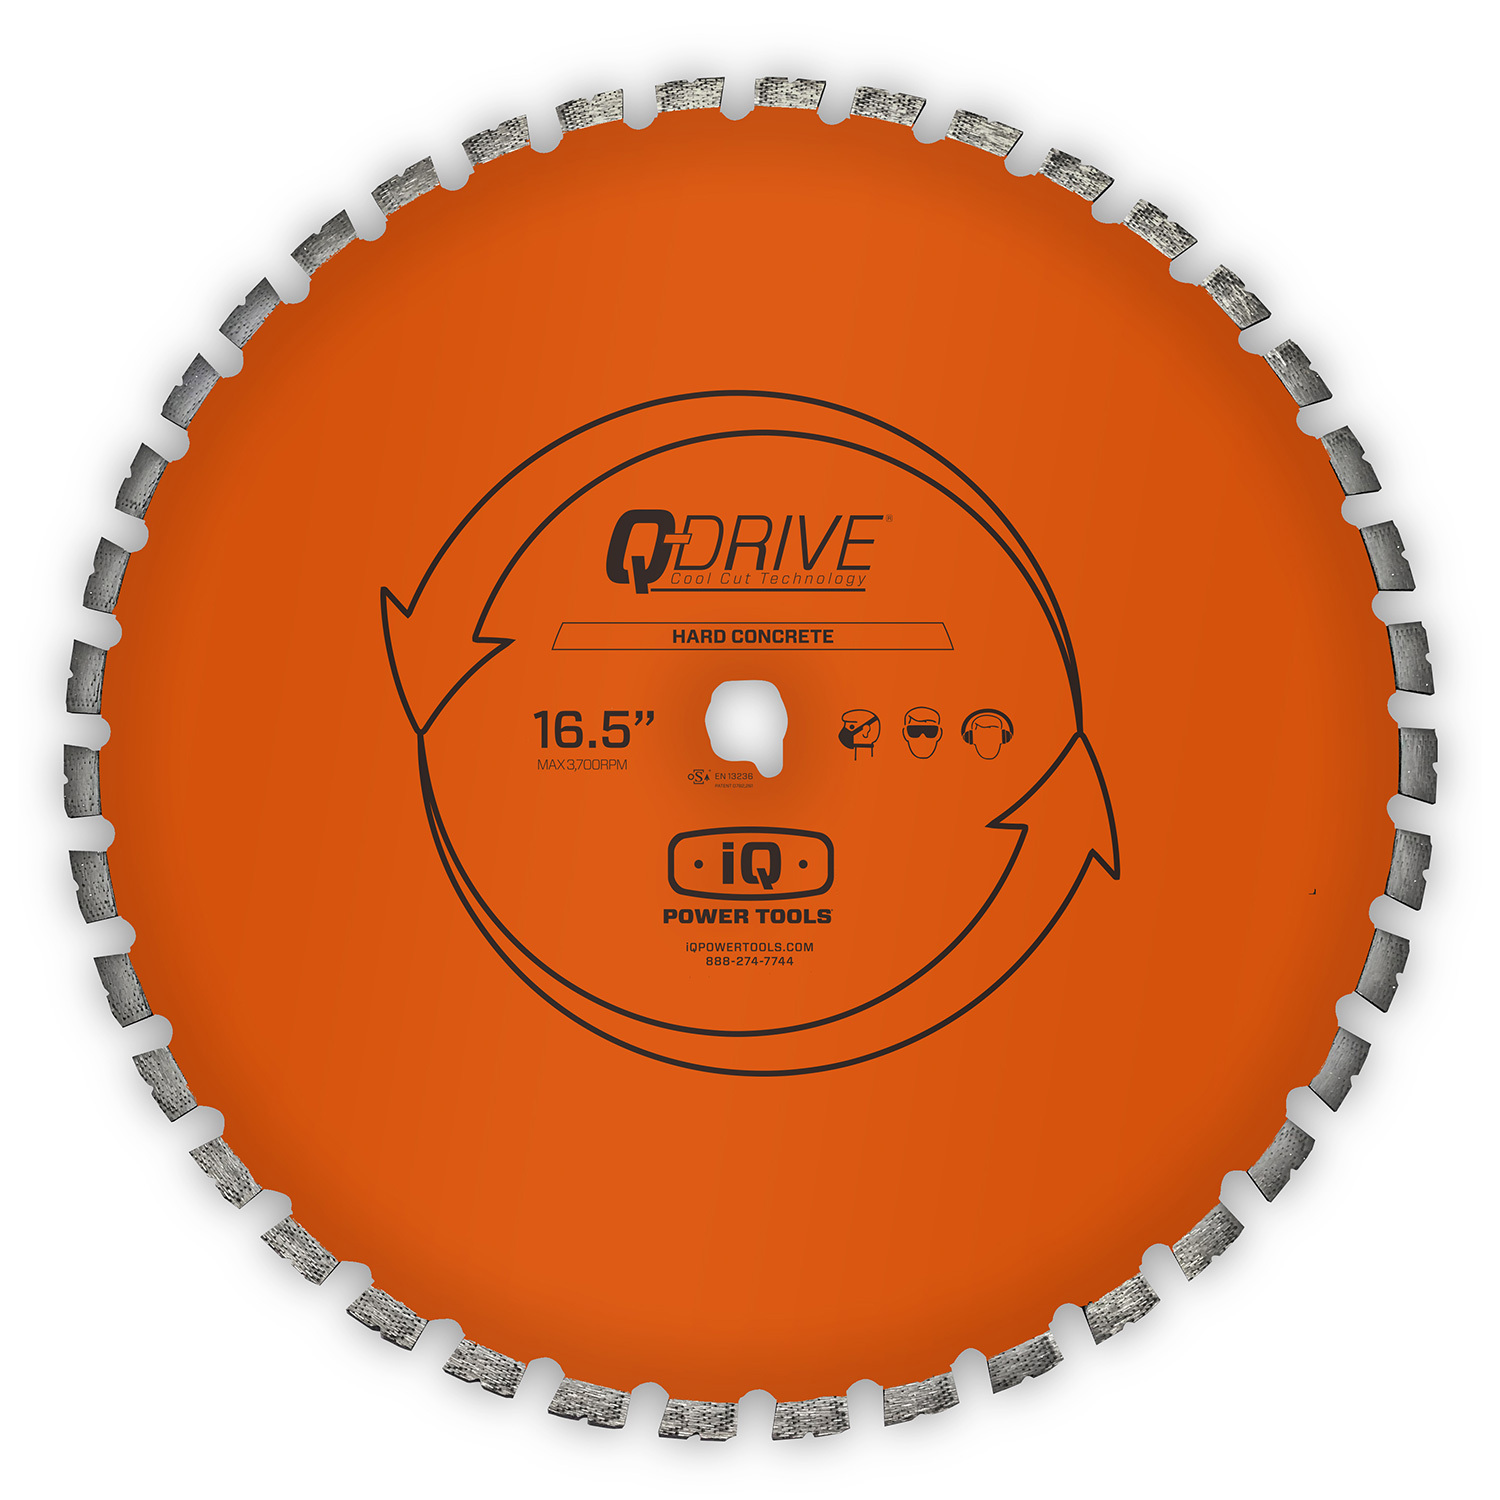 IQ Power Tools 420mm Hard Concrete Saw Blade - Orange